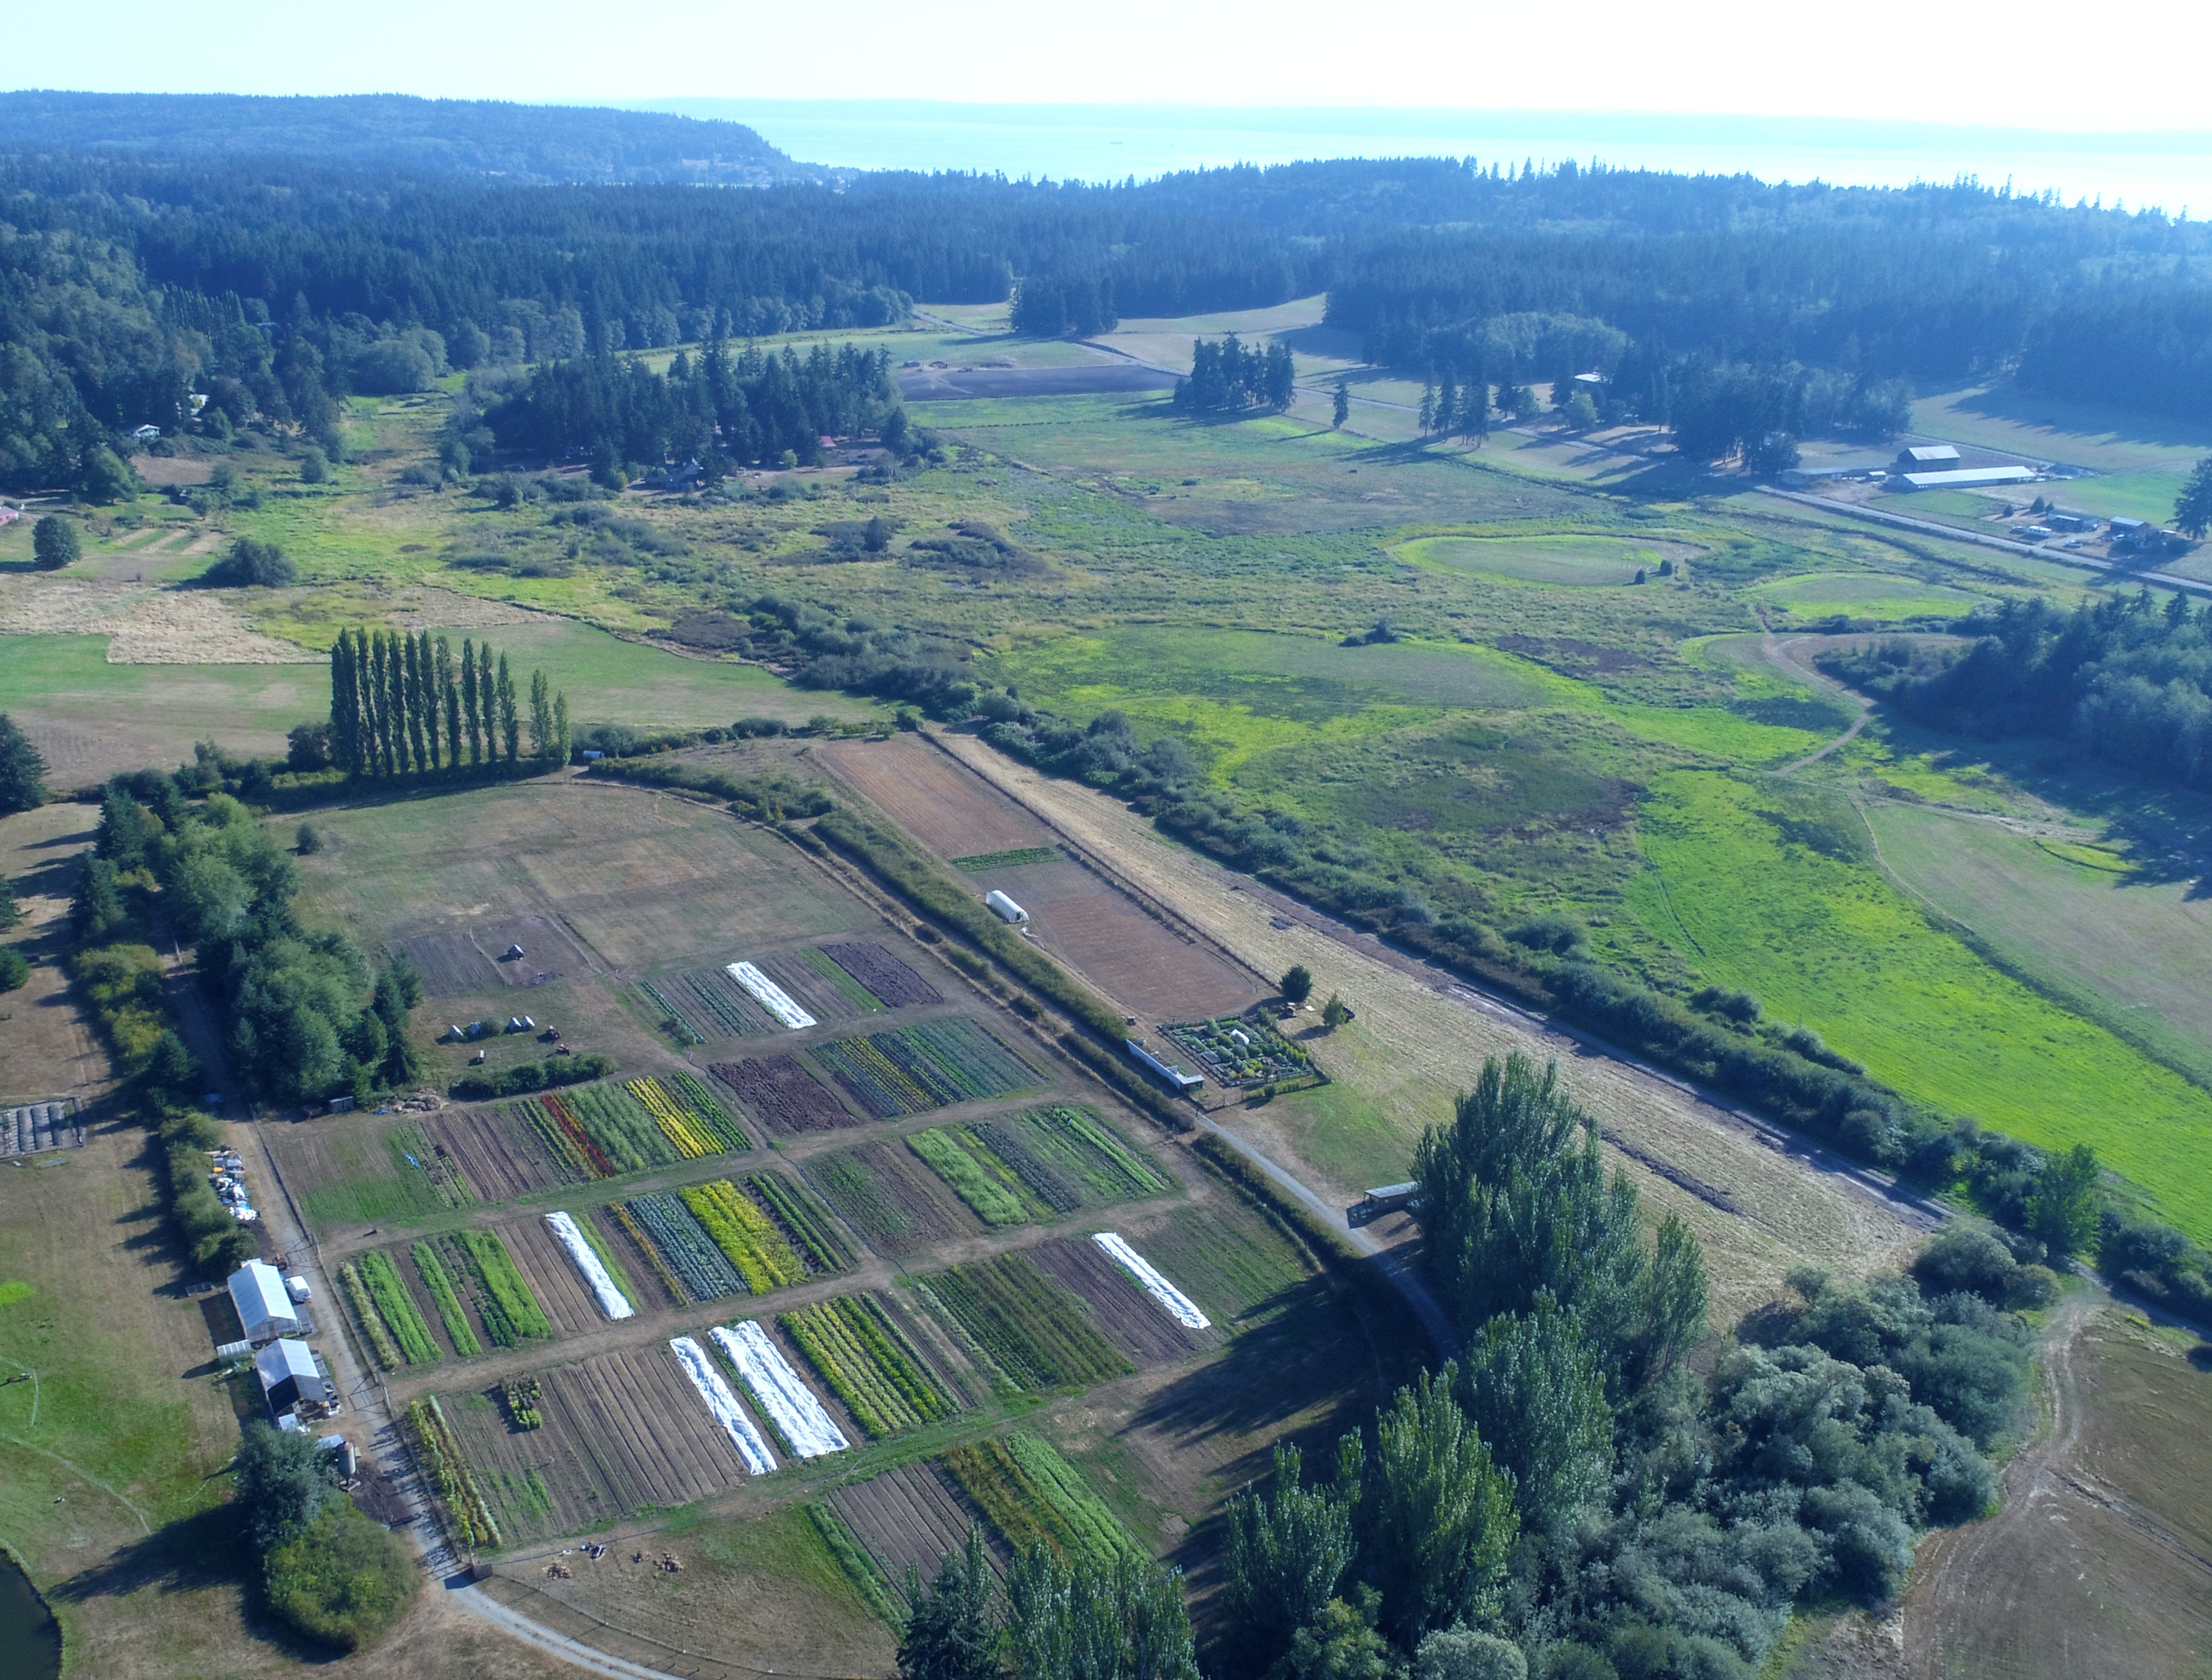 A bird's eye view of the Organic Farm School.